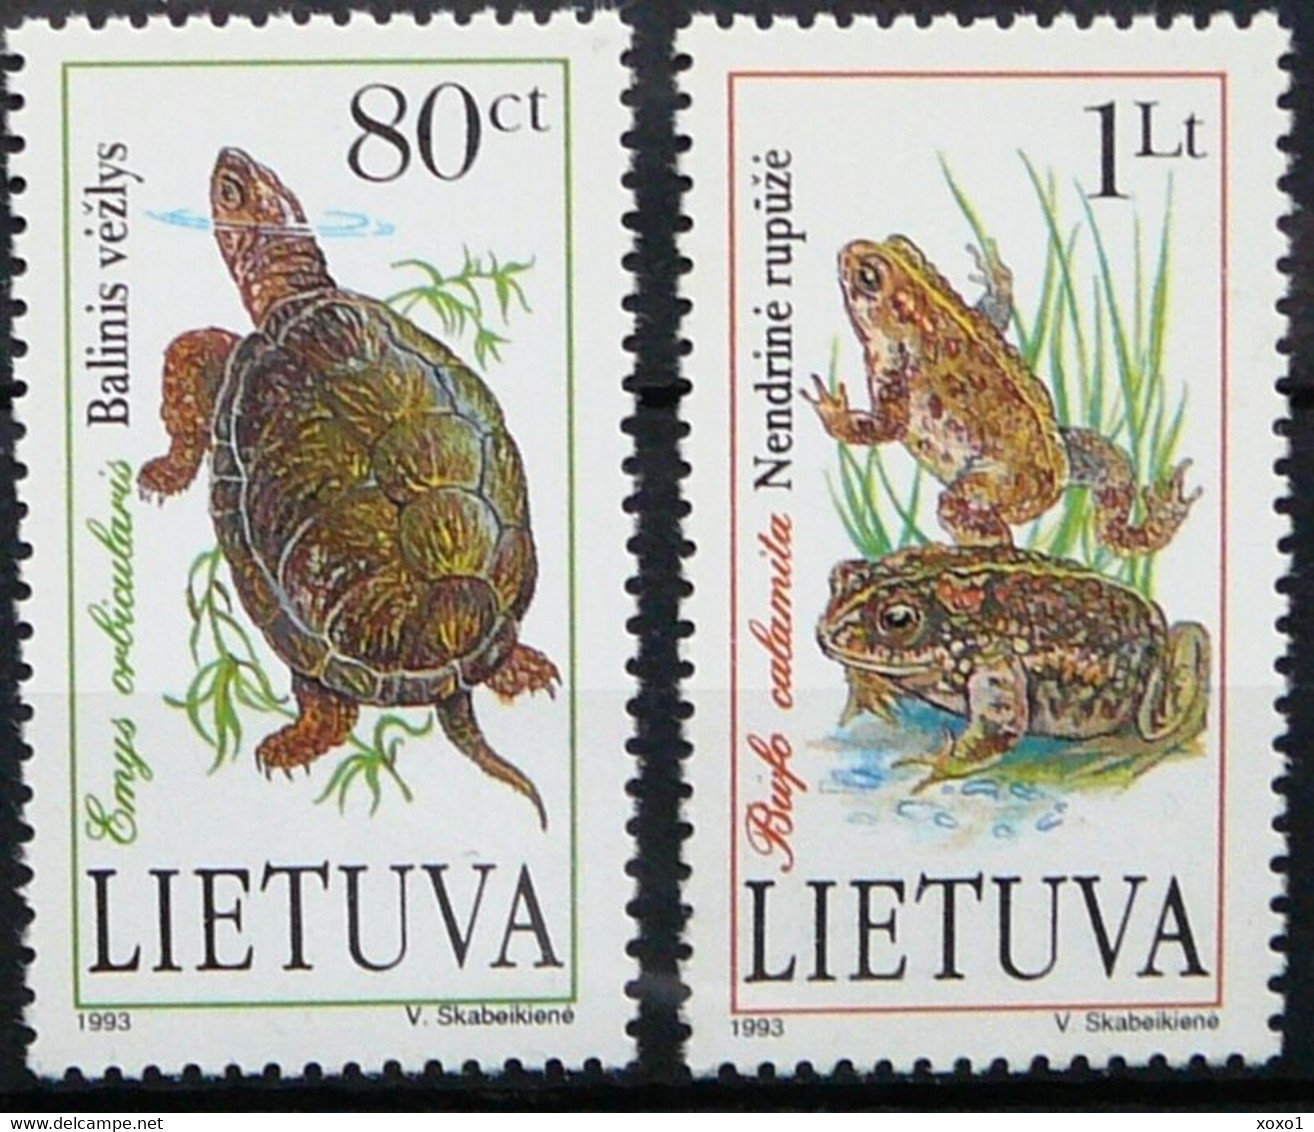 Lithuania 1993 MiNr. 545 - 546 Litauen Reptiles European Pond Turtle, Amphibians Natterjack Toad 2v MNH** 1,50 € - Tortues